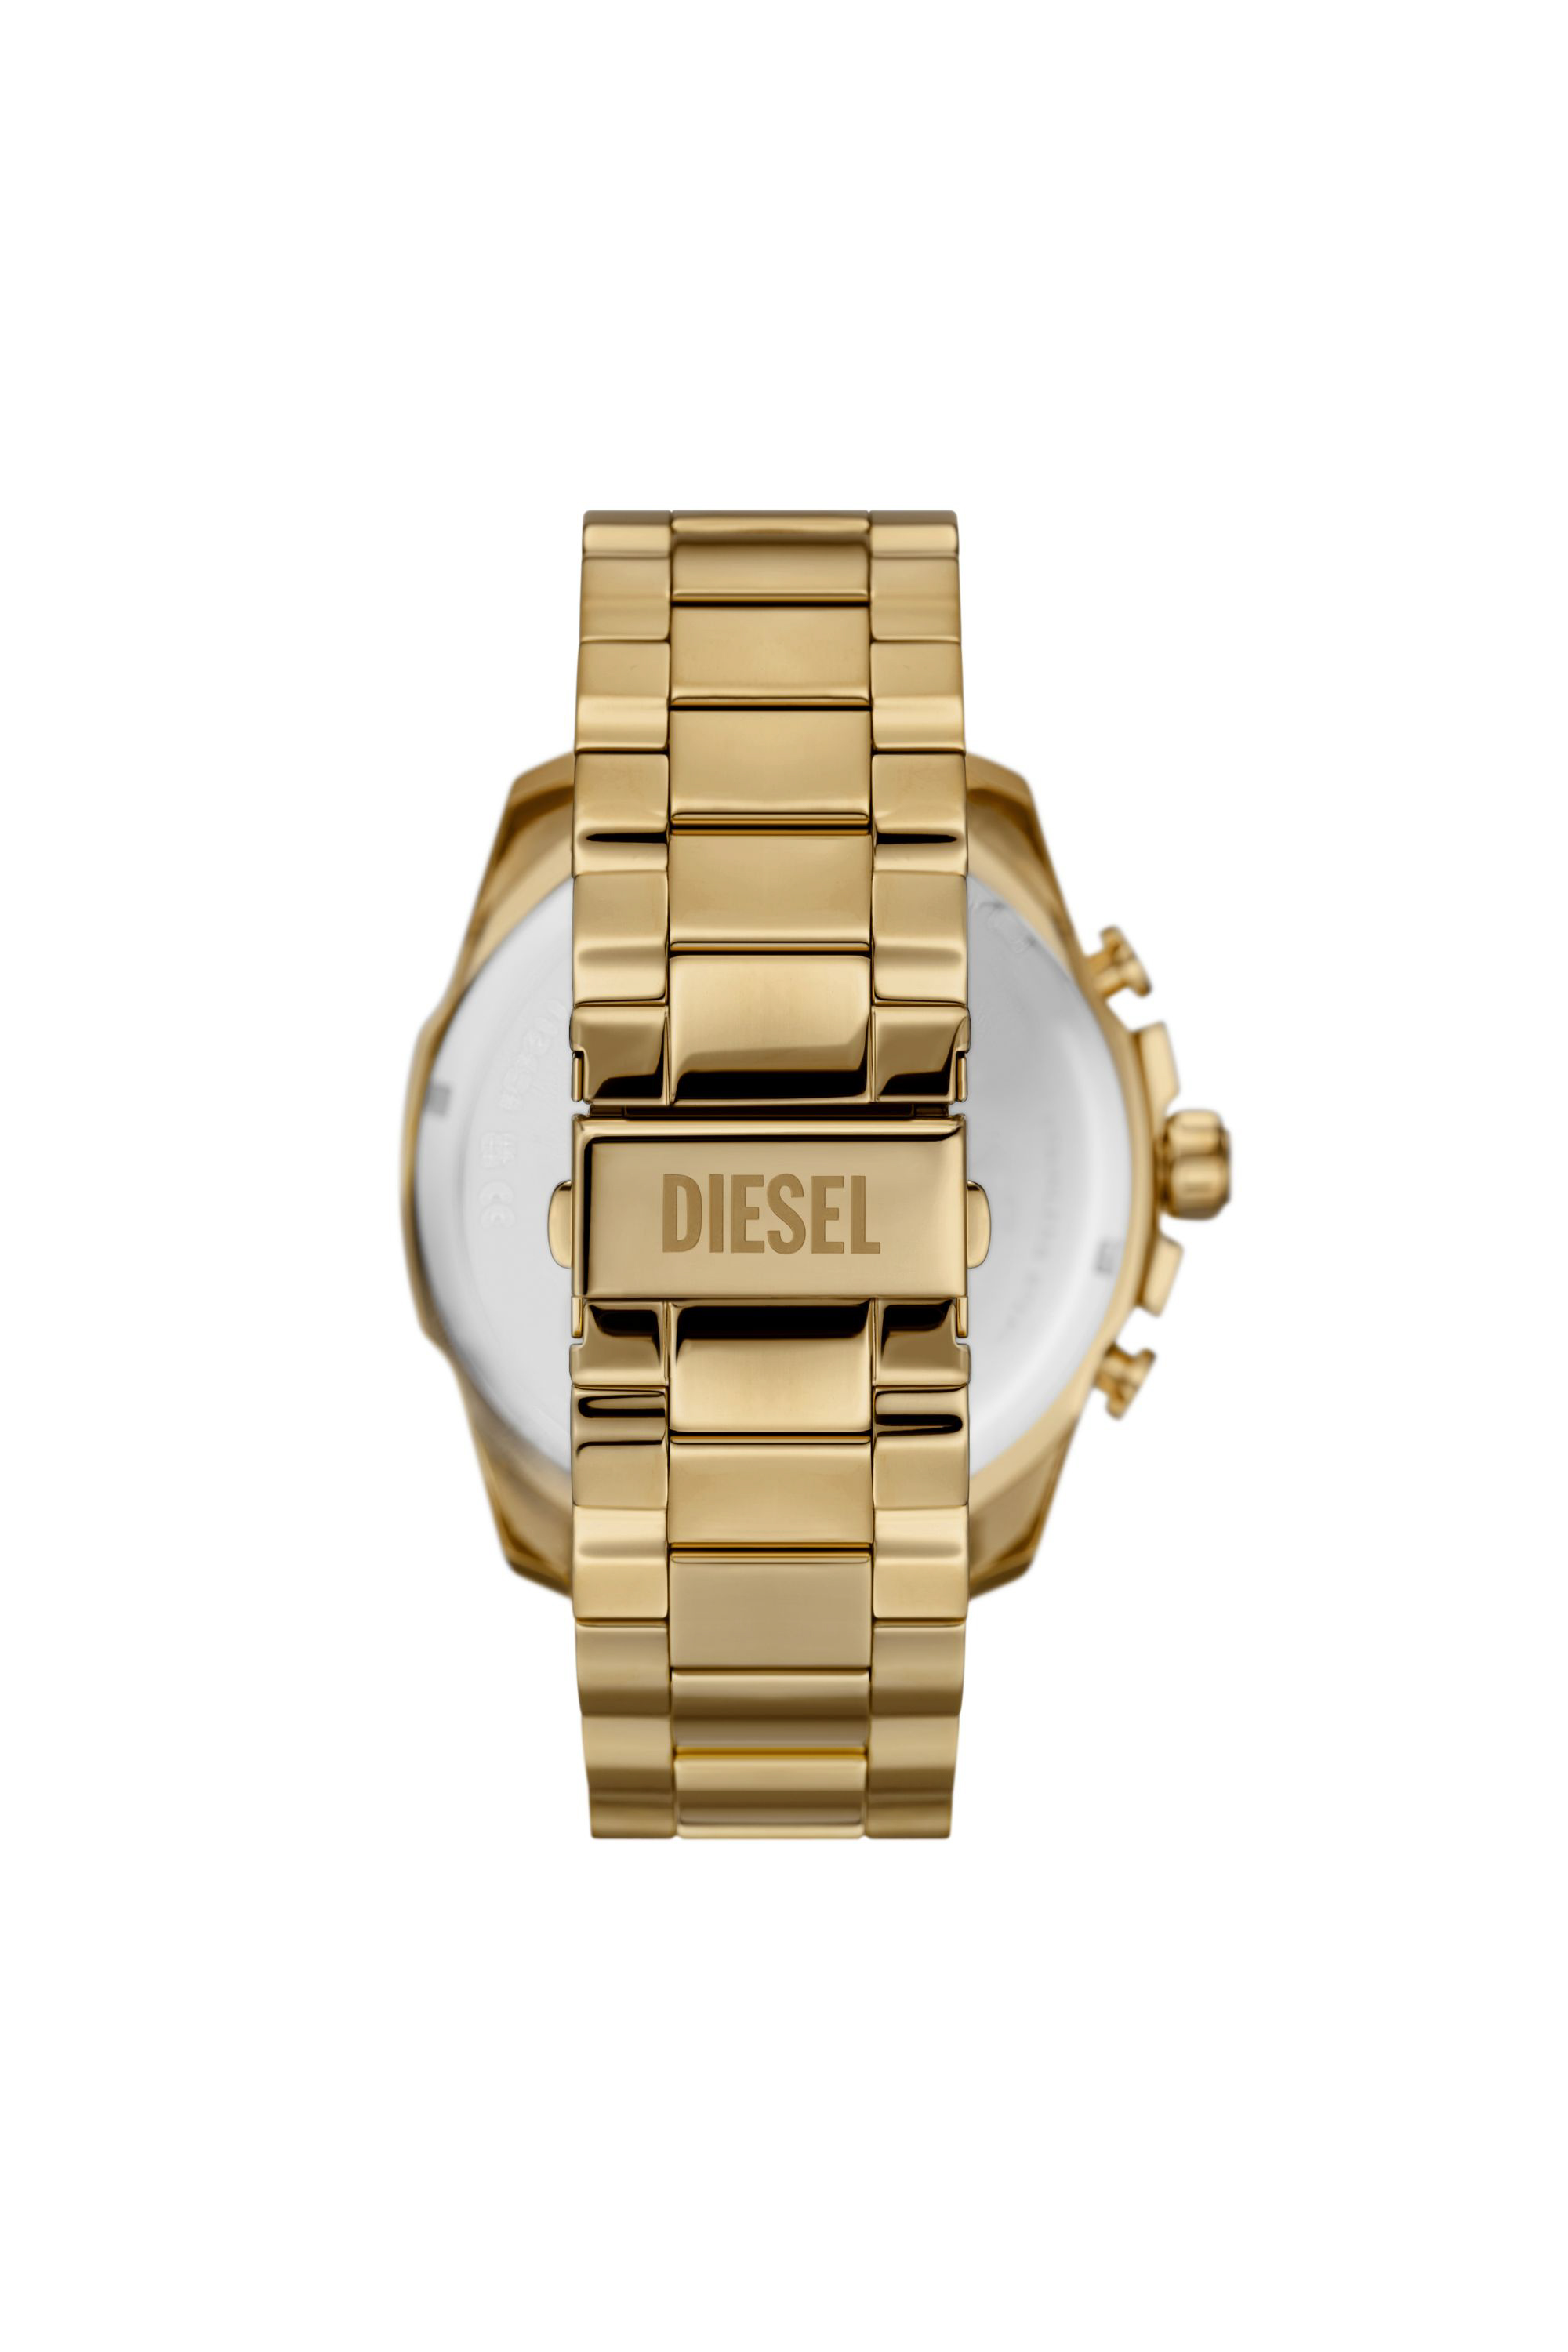 Diesel - DZ4662, Herren Mega Chief Chronograph/Armbanduhr aus goldfarbenem Edelstahl in Gold - Image 2